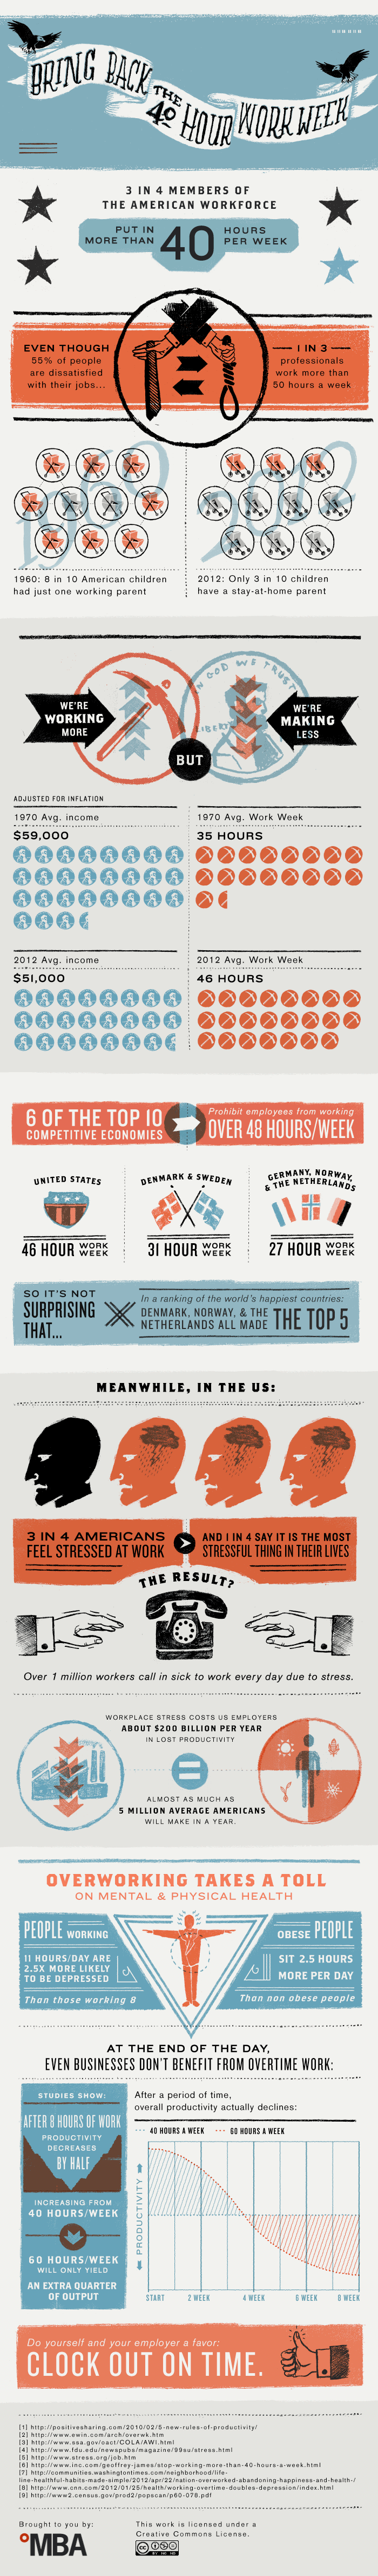 Work Week Infographic Bring Back The 40 Hour Work Week